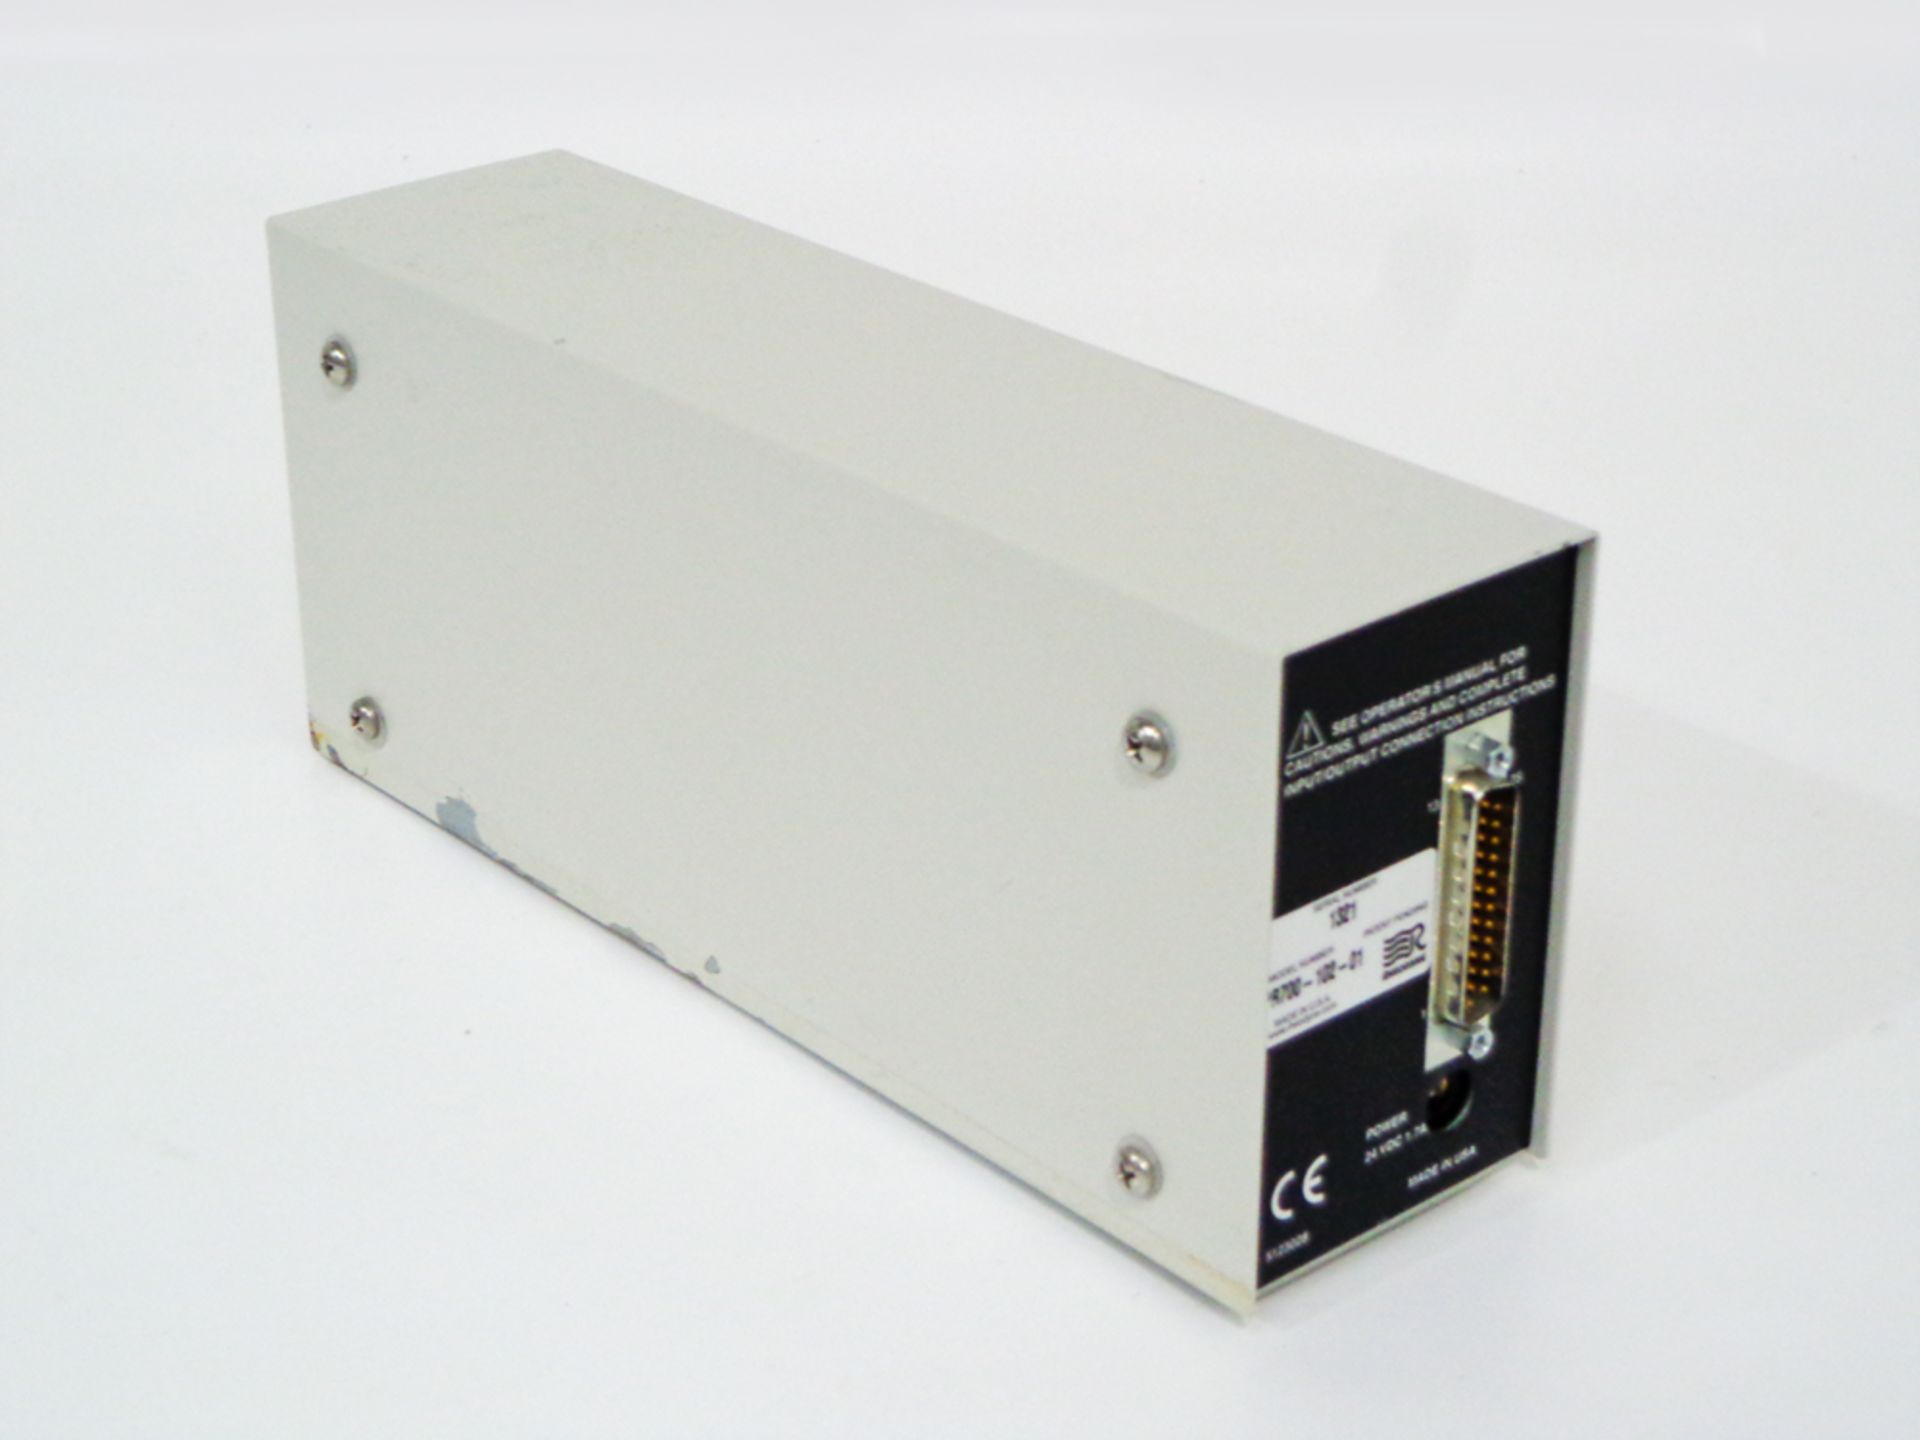 Rheodyne Labpro Valve Controller PR100-106-02, serial number 1321 (Ref: WA11001) - Image 3 of 6